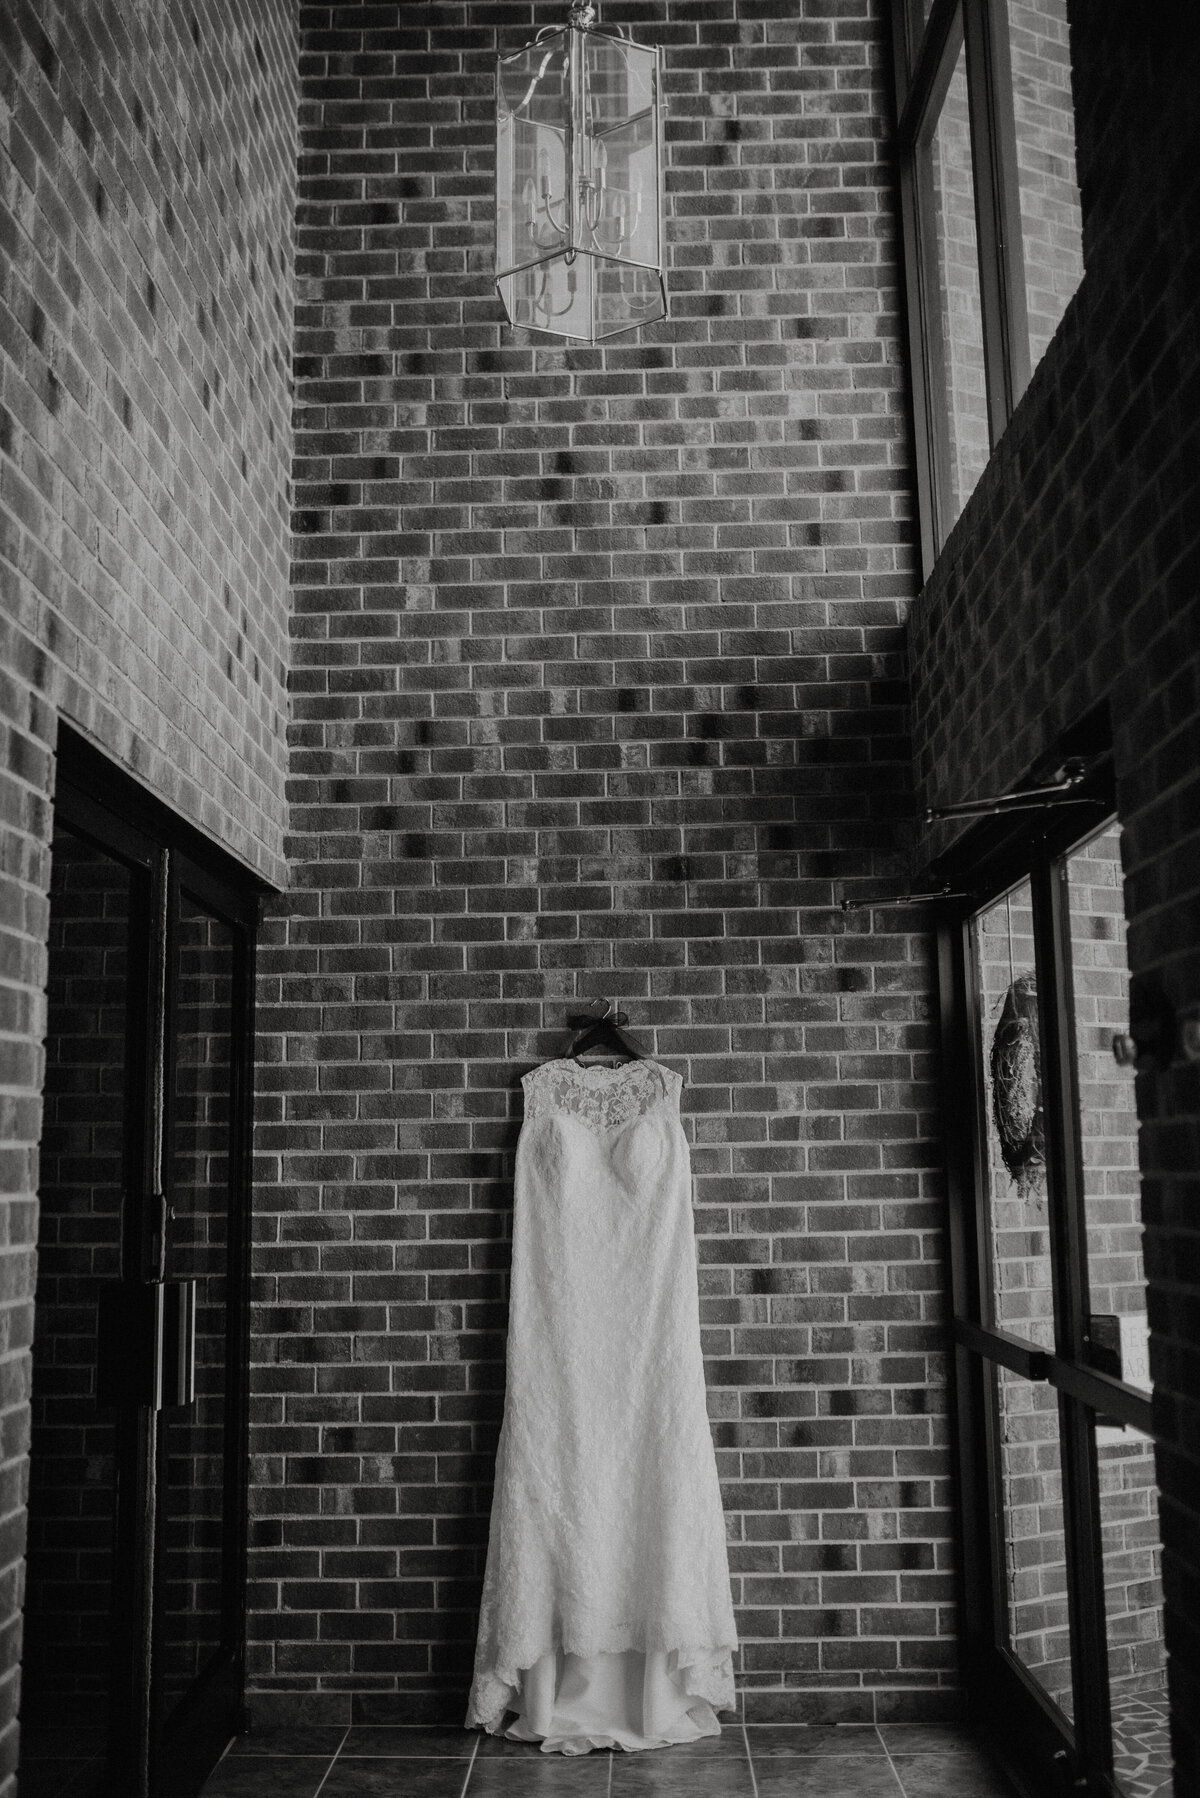 A wedding dress hangs on a brick wall